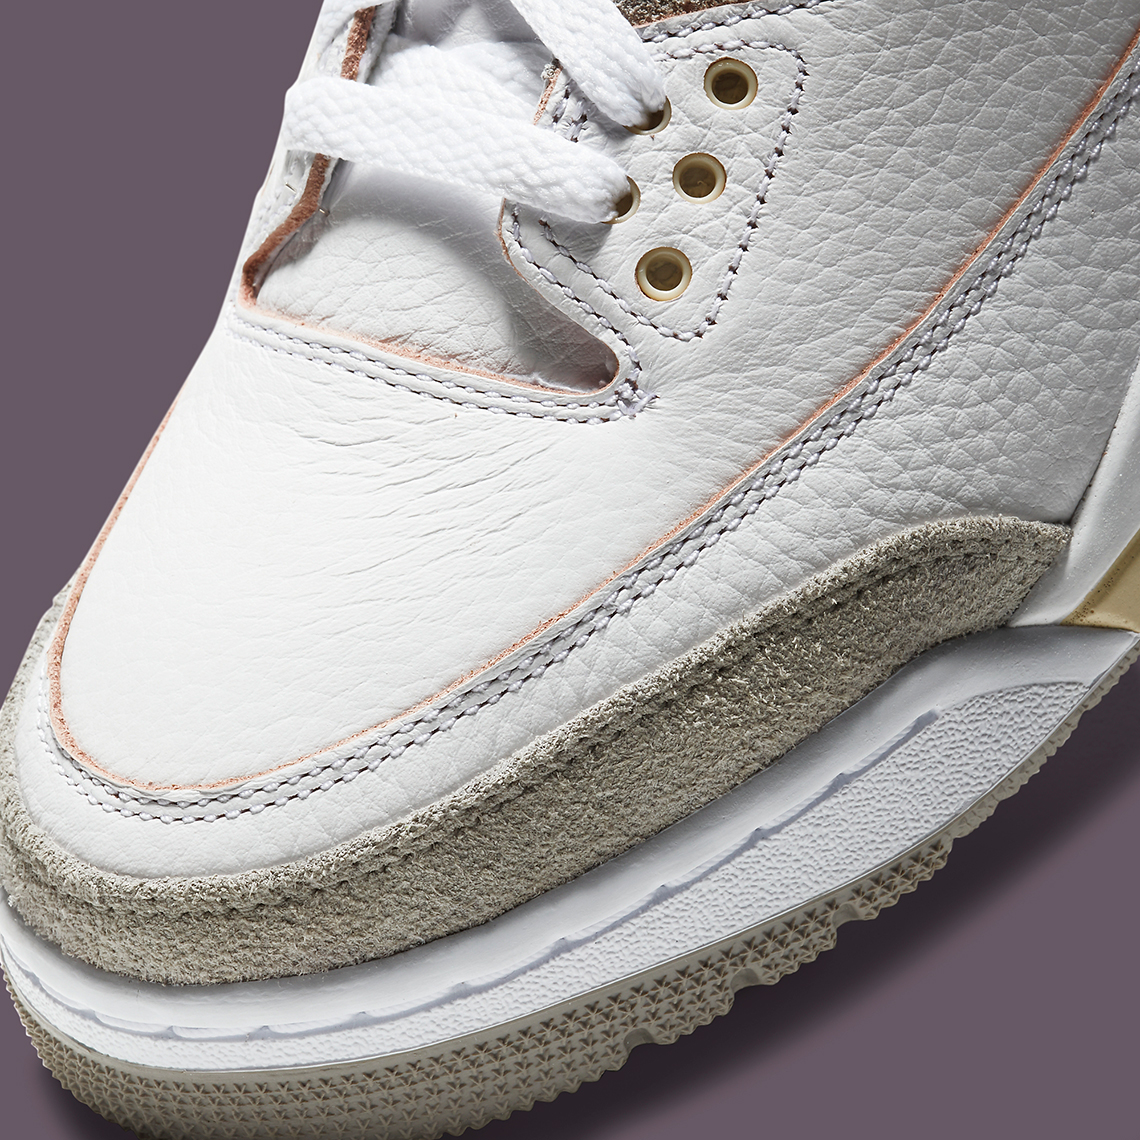 A Ma Maniere Air Jordan 3 DH Release Date   SneakerNews.com